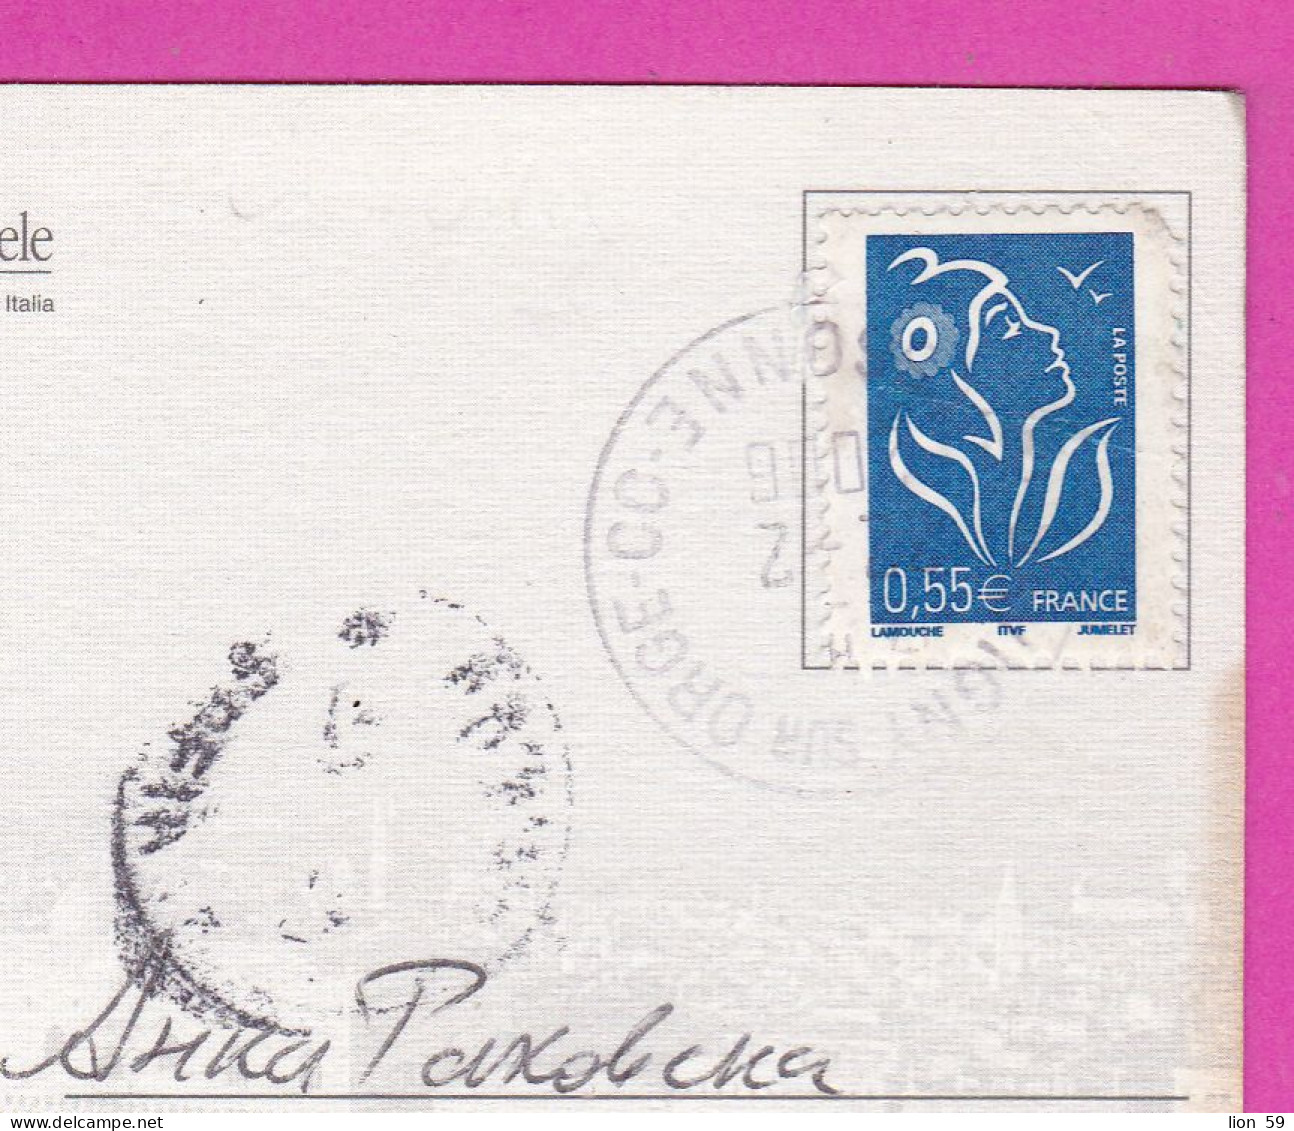 294122 / France - VENEZIA (Italy)  PC 2006 Brétigny-sur-Orge USED  0.55 € - Marianne Of Lamouche , Frankreich Francia - Briefe U. Dokumente